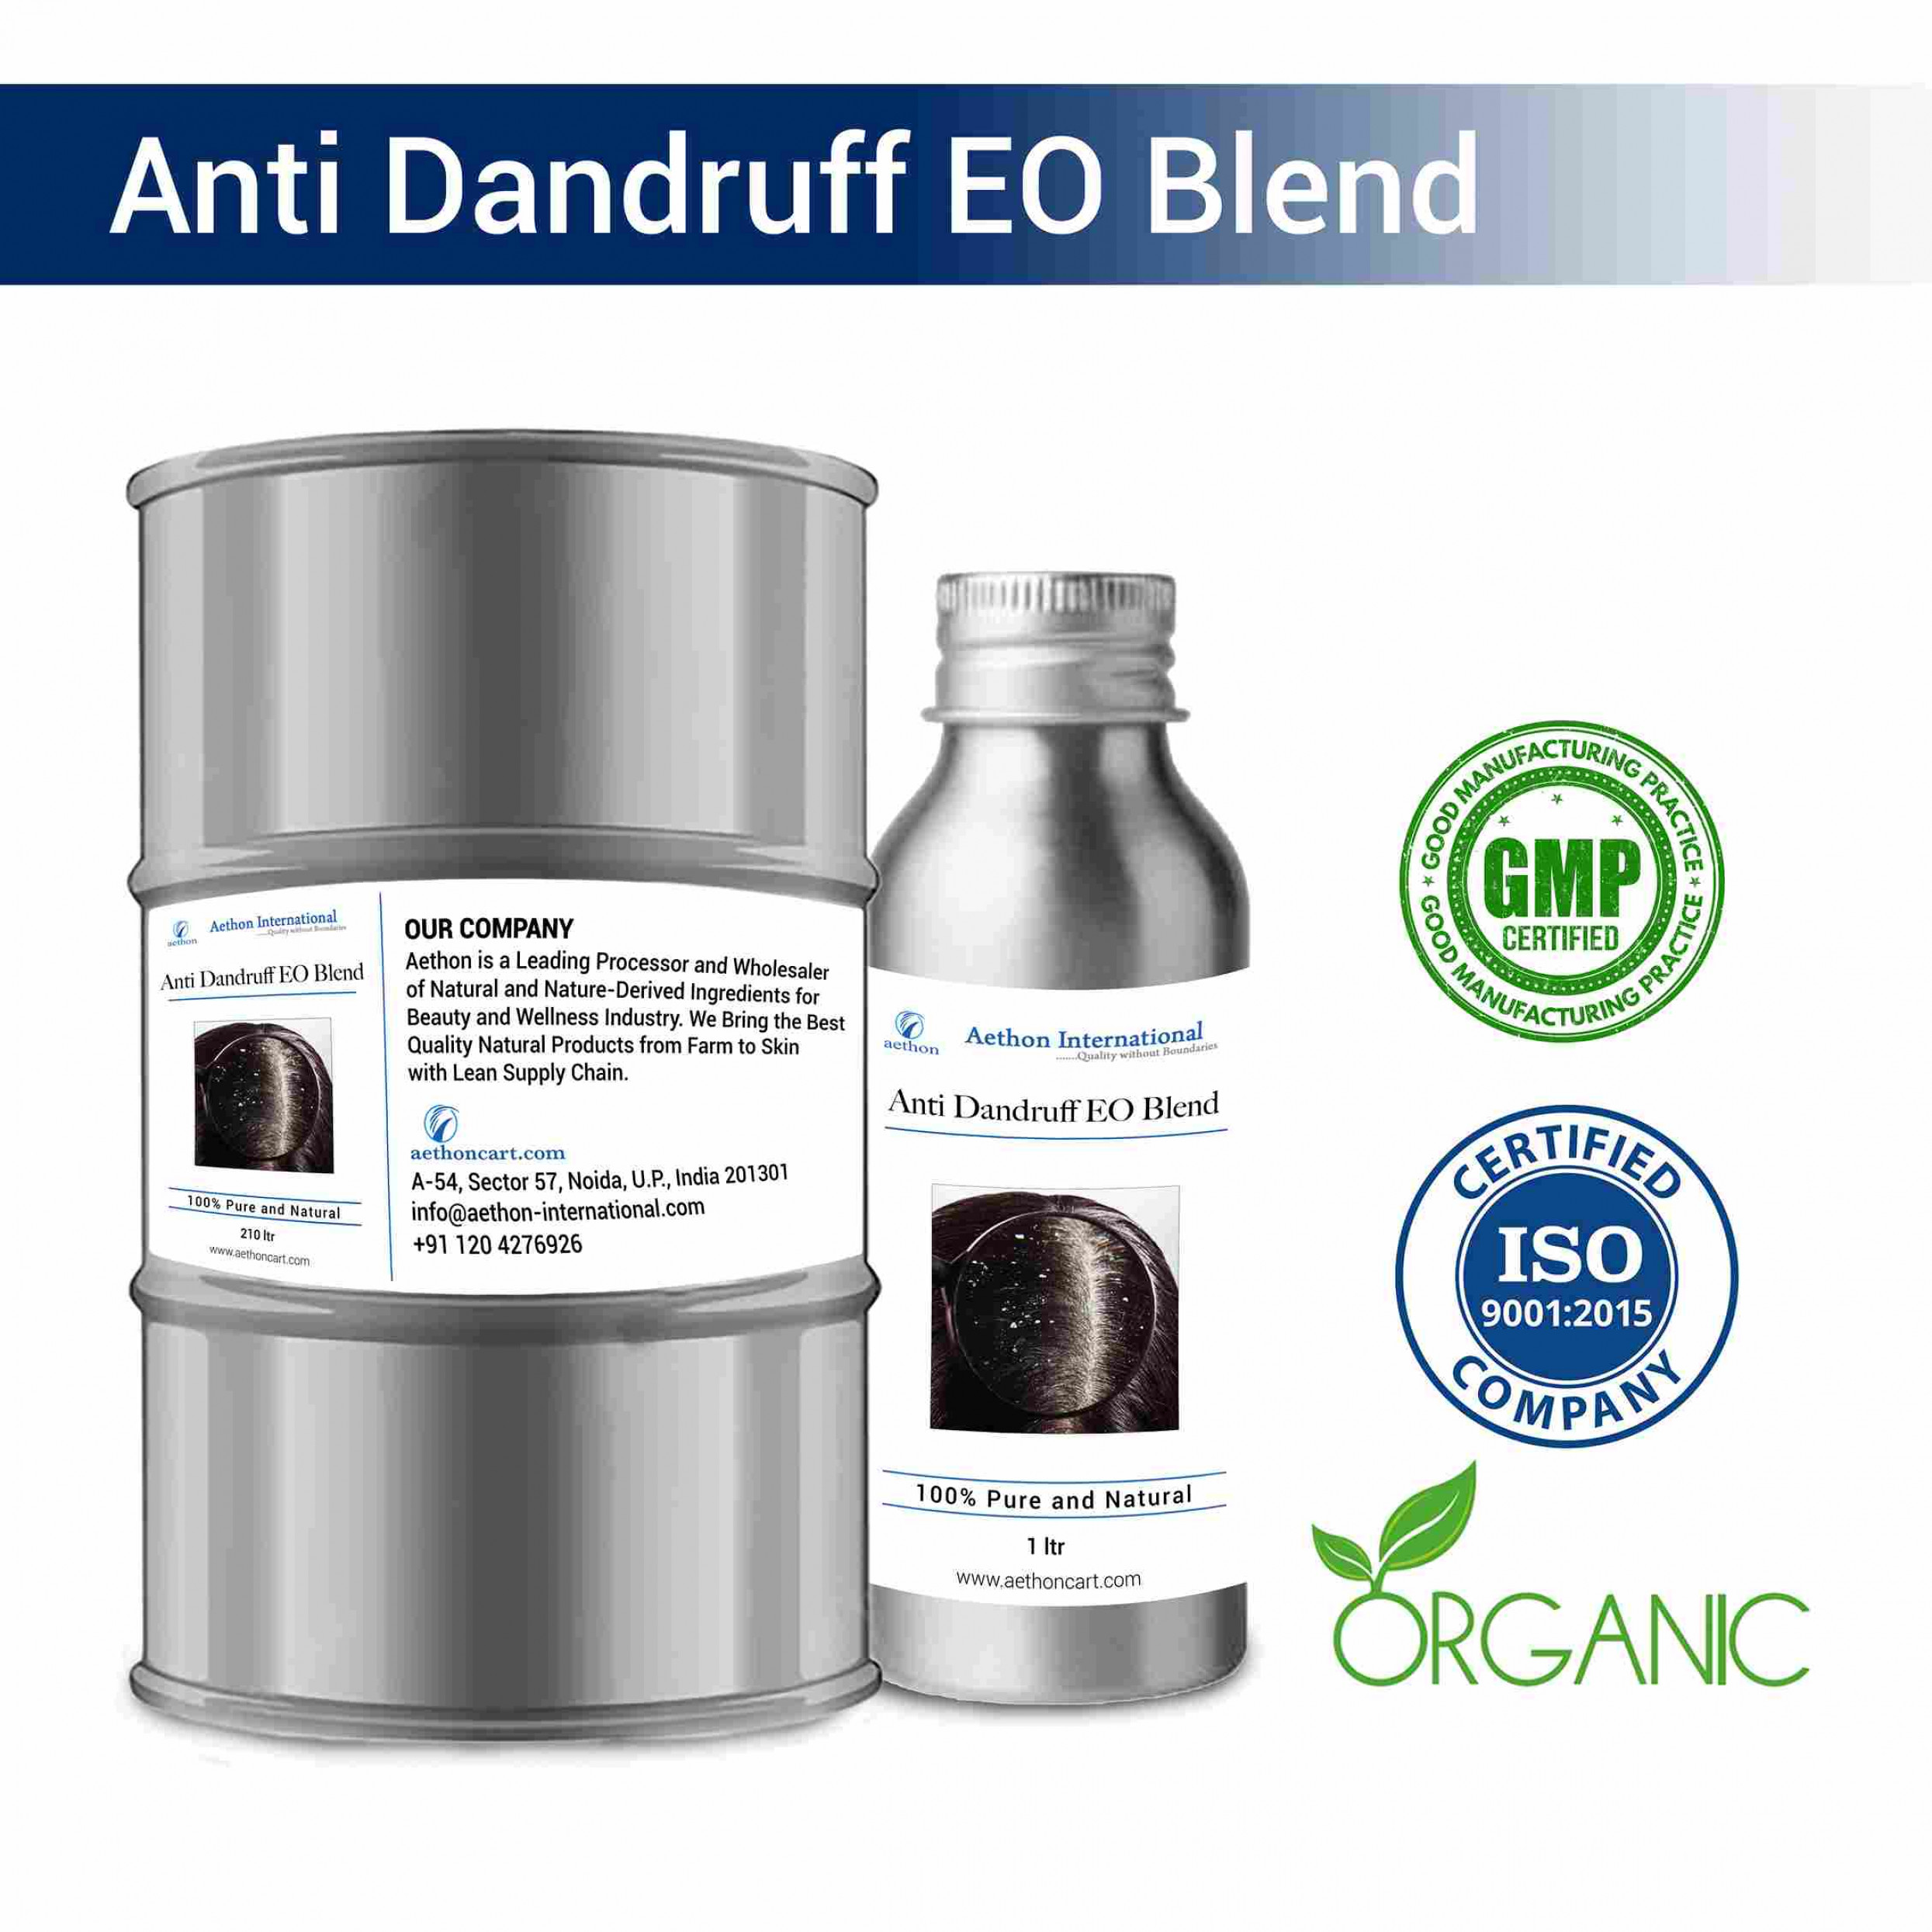 Anti Dandruff EO Blend